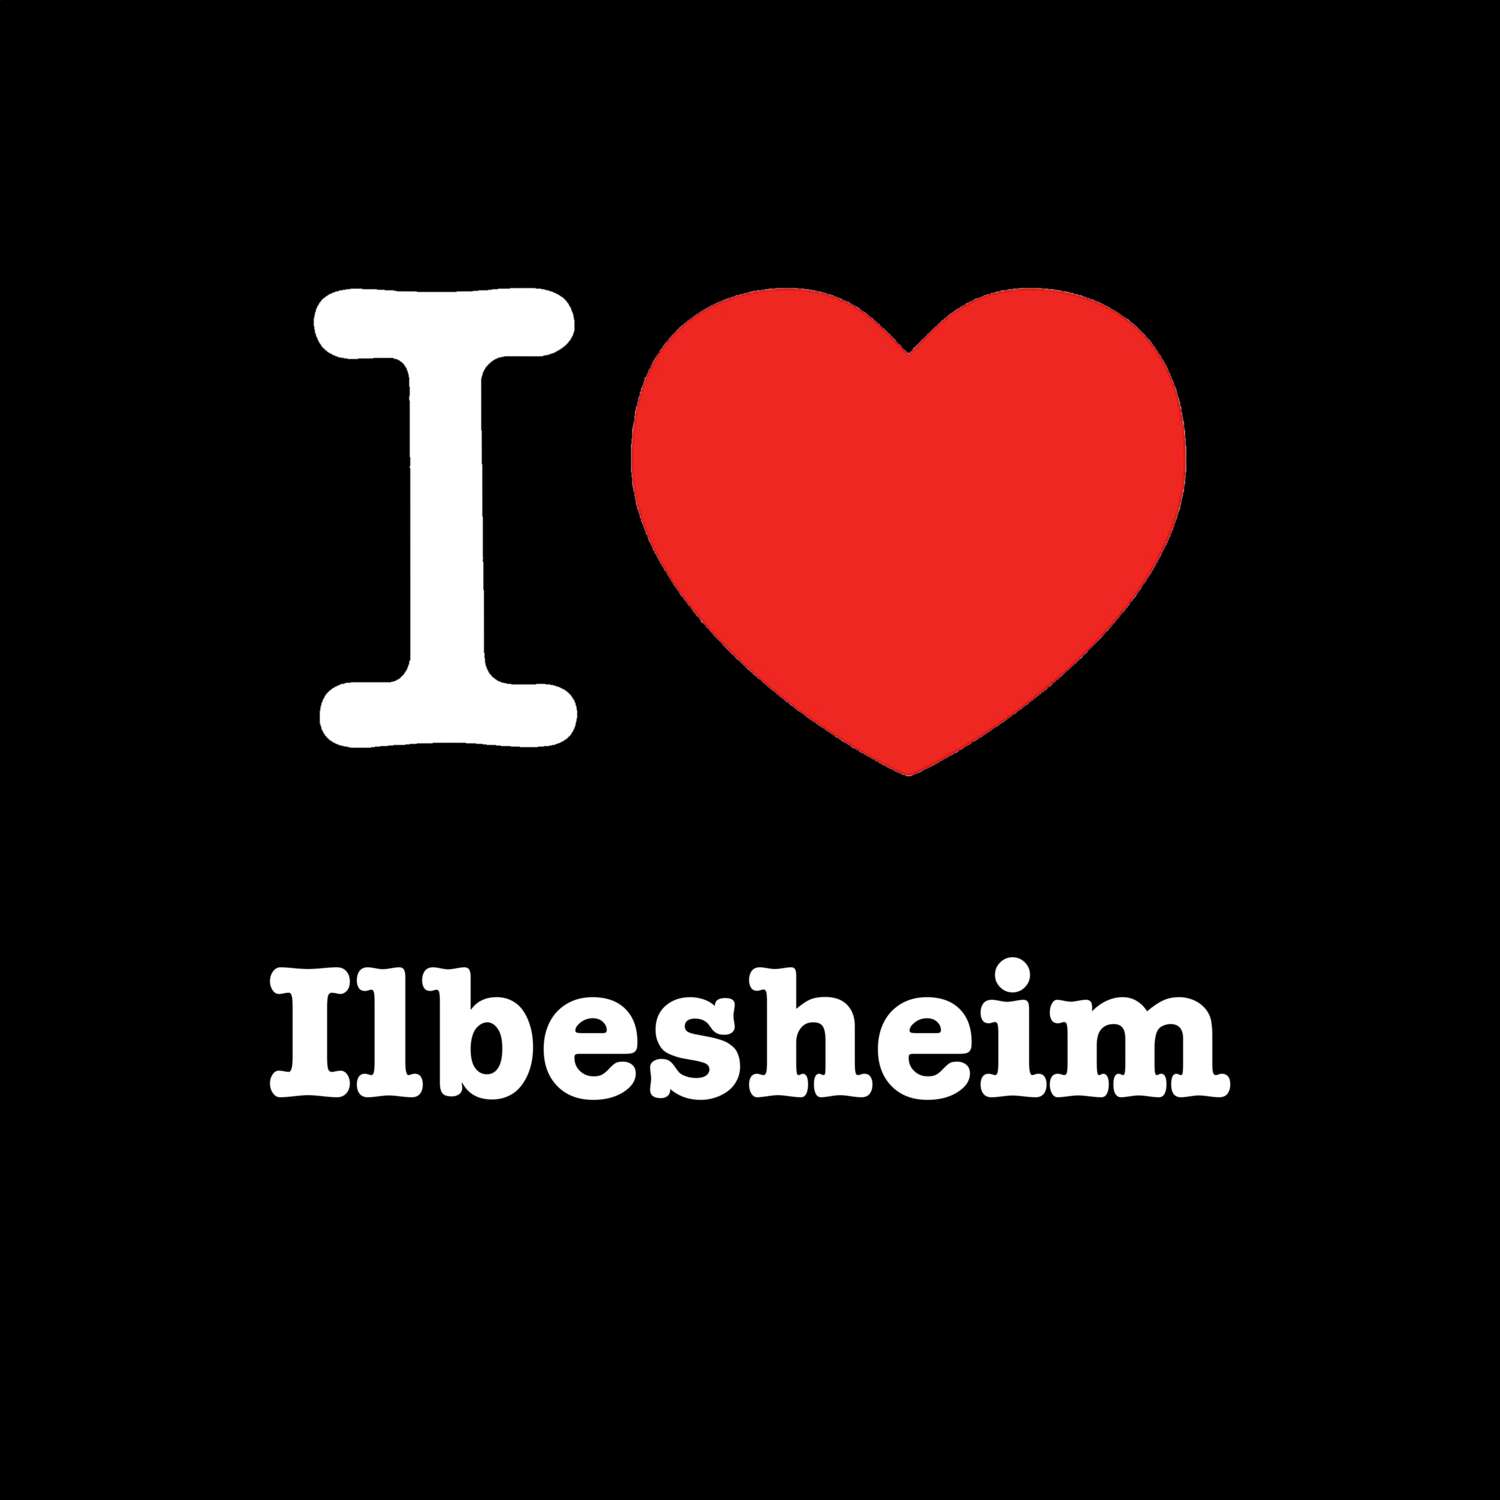 Ilbesheim T-Shirt »I love«